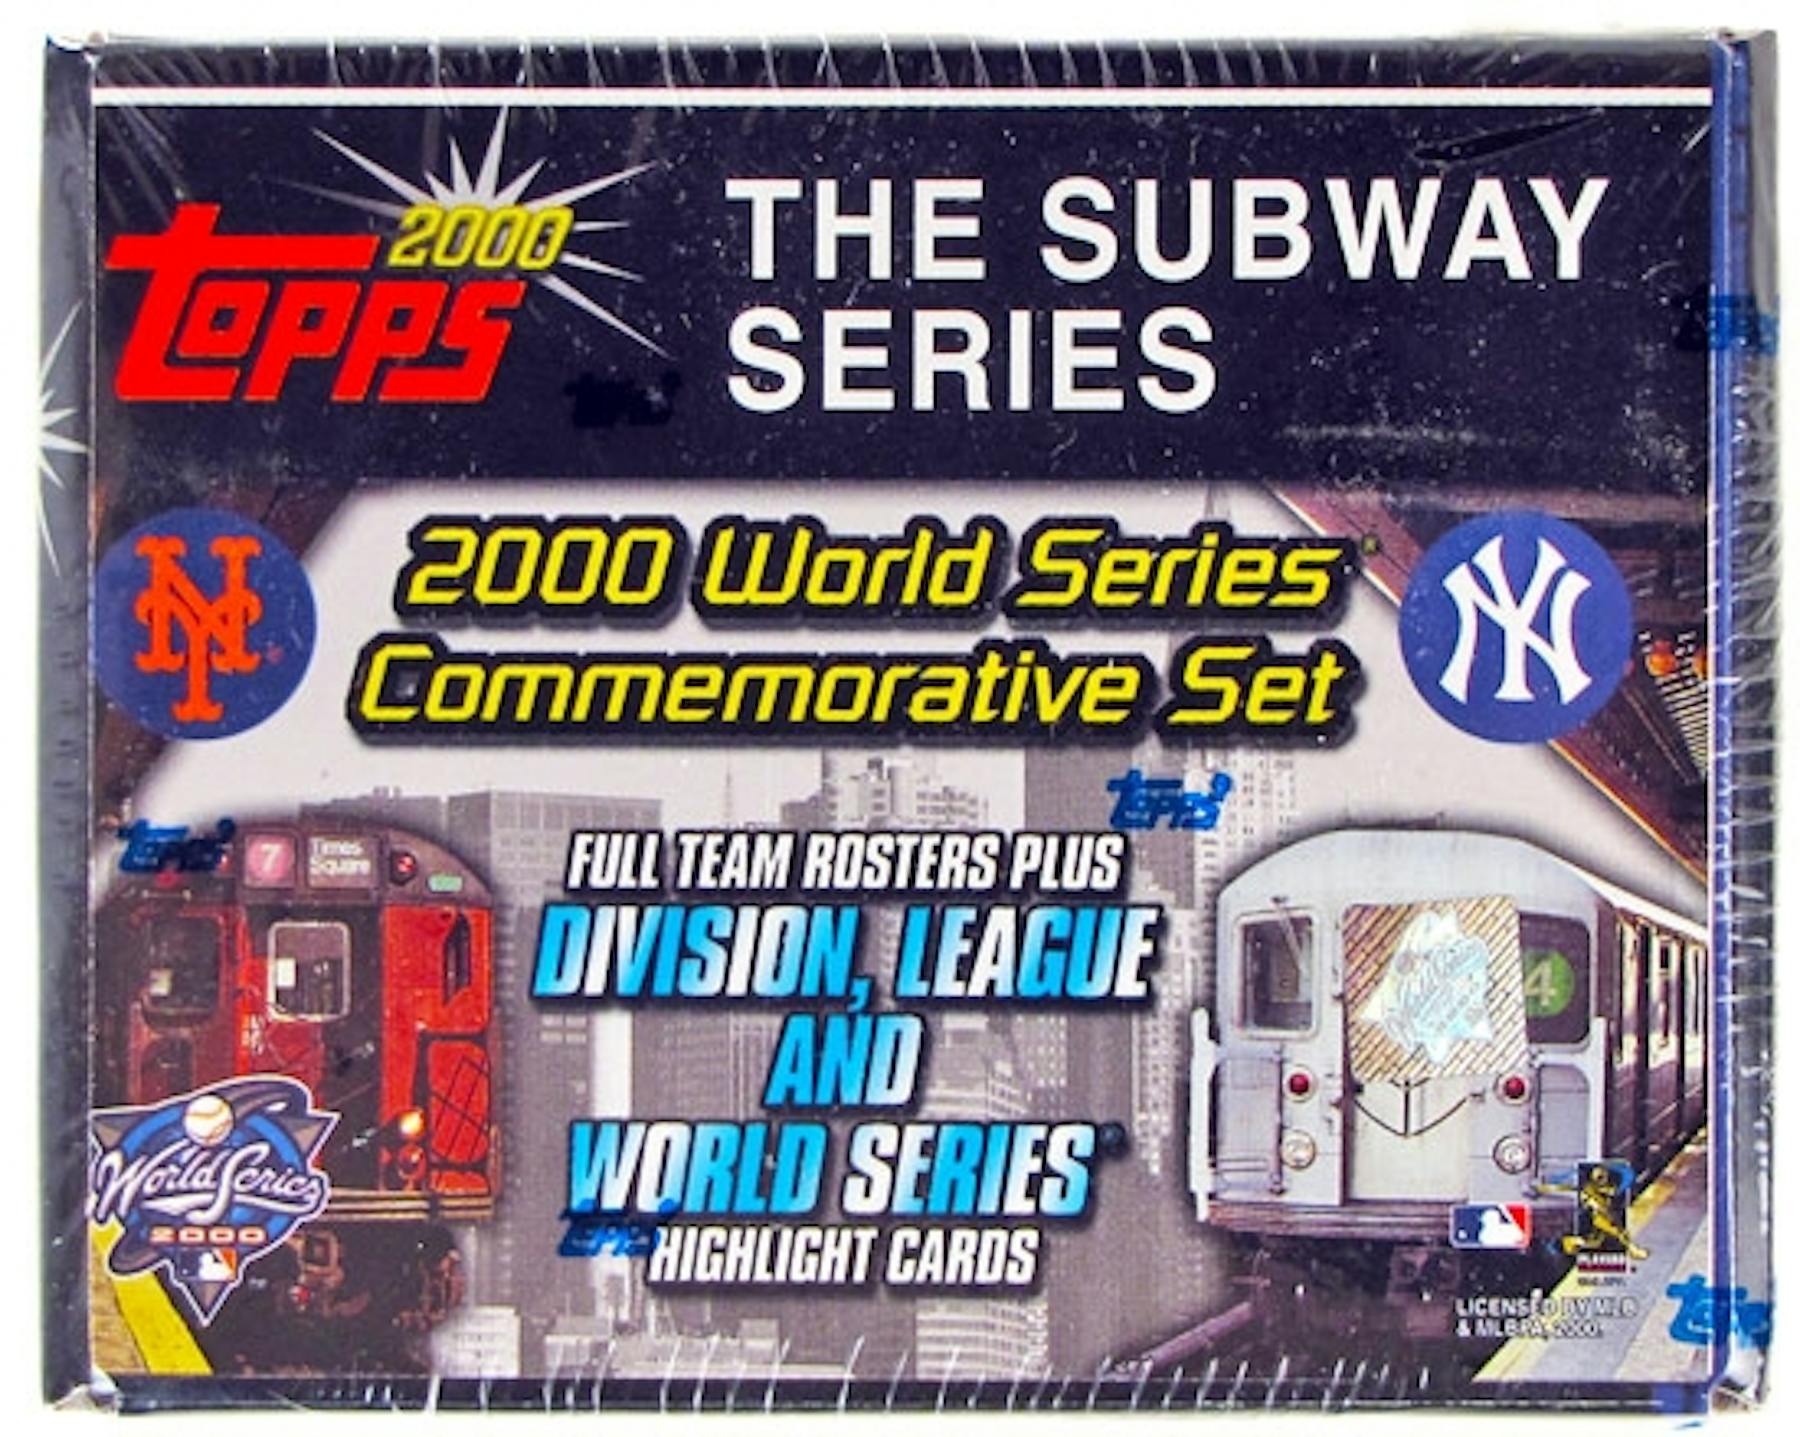 The Subway Series 2000 World Series Yankees vs. Mets